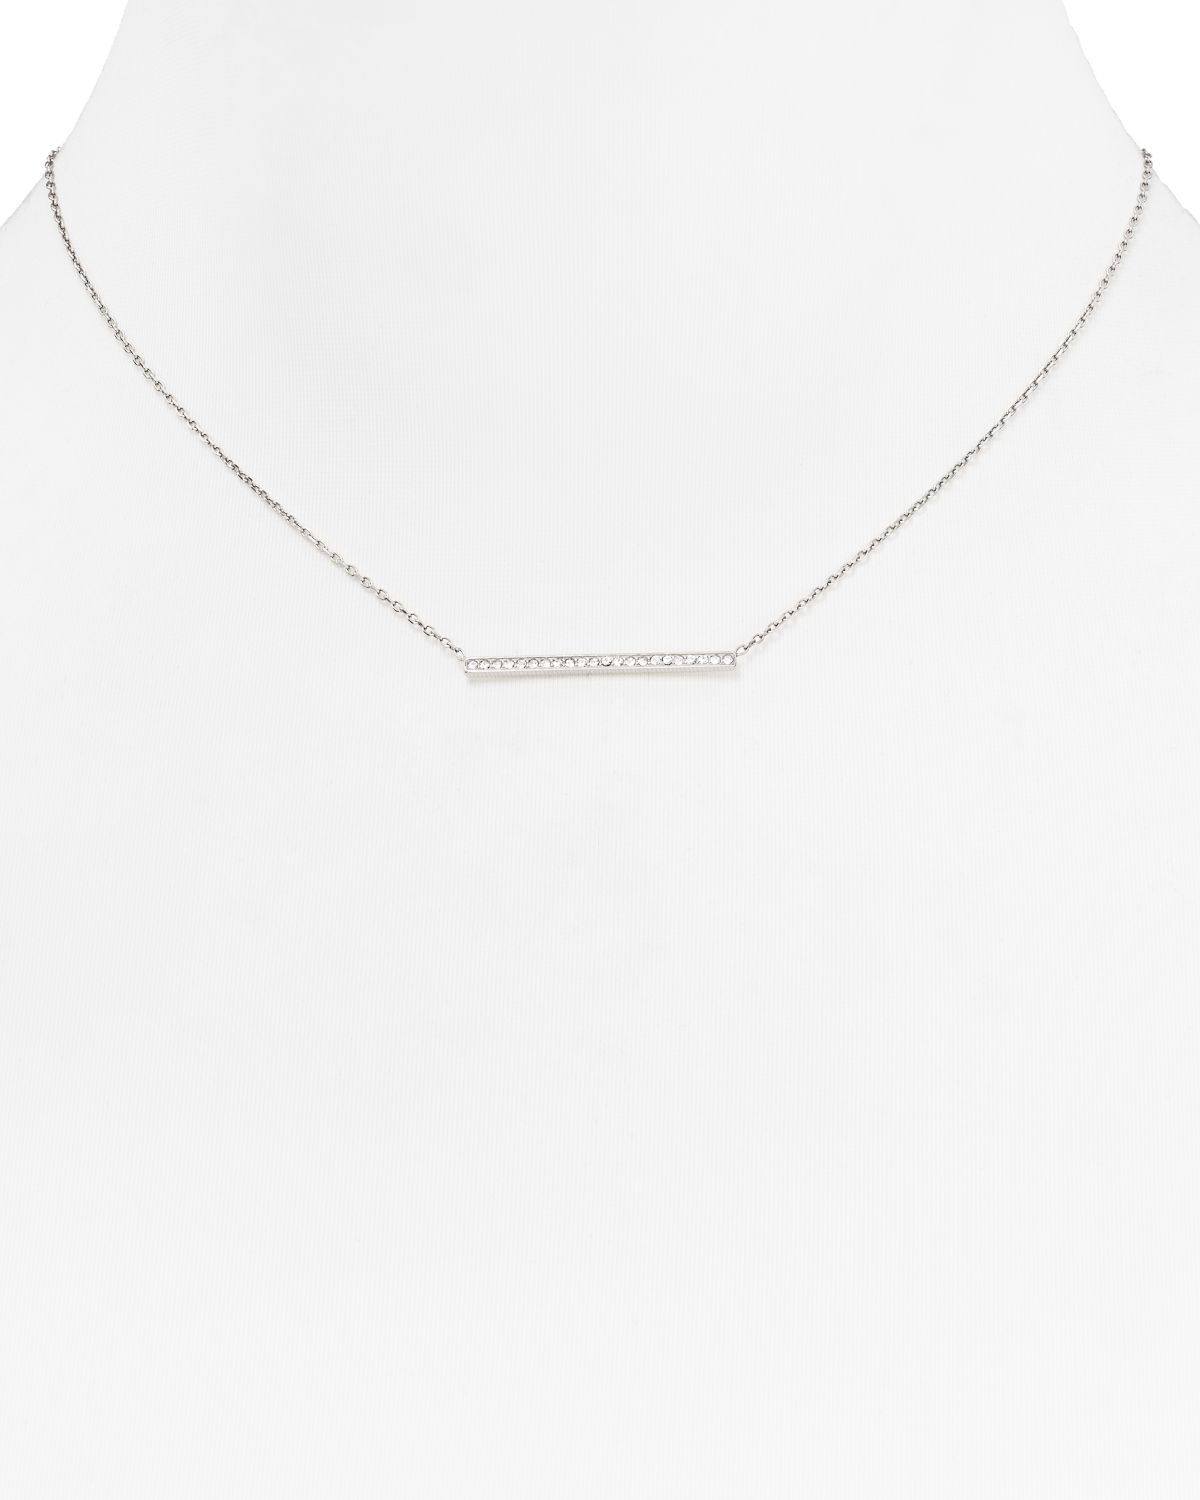 Michael Kors Pavé Bar Pendant Necklace, 16" in Metallic - Lyst